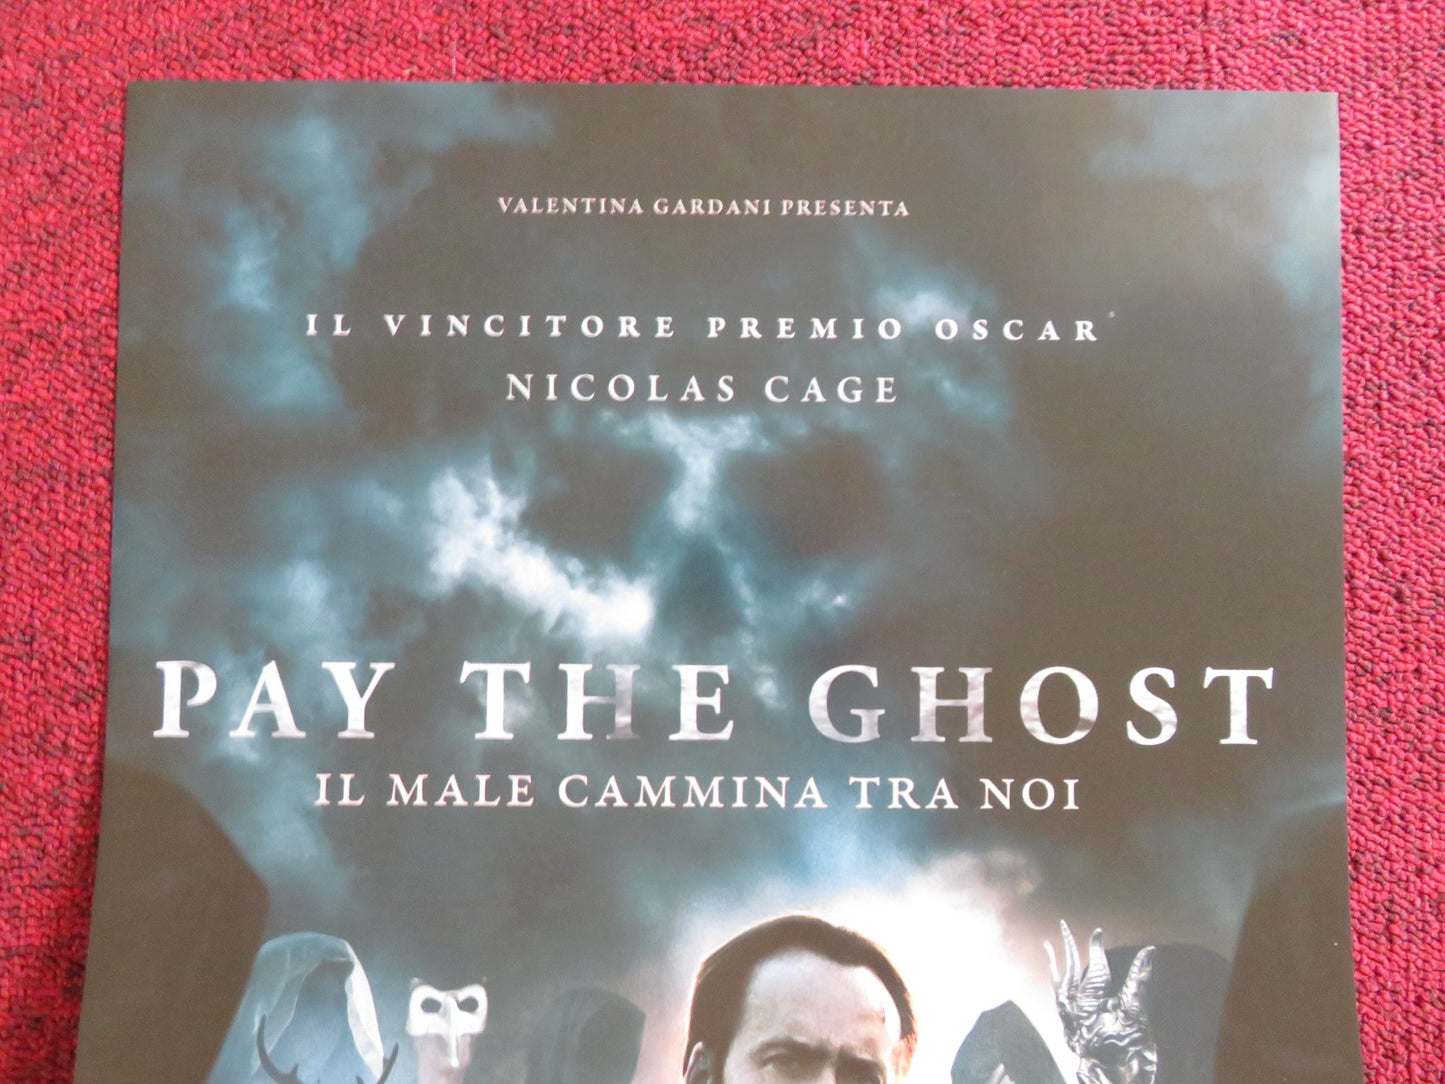 PAY THE GHOST ITALIAN LOCANDINA POSTER NICOLAS CAGE SARAH WAYNE CALLIES 2015